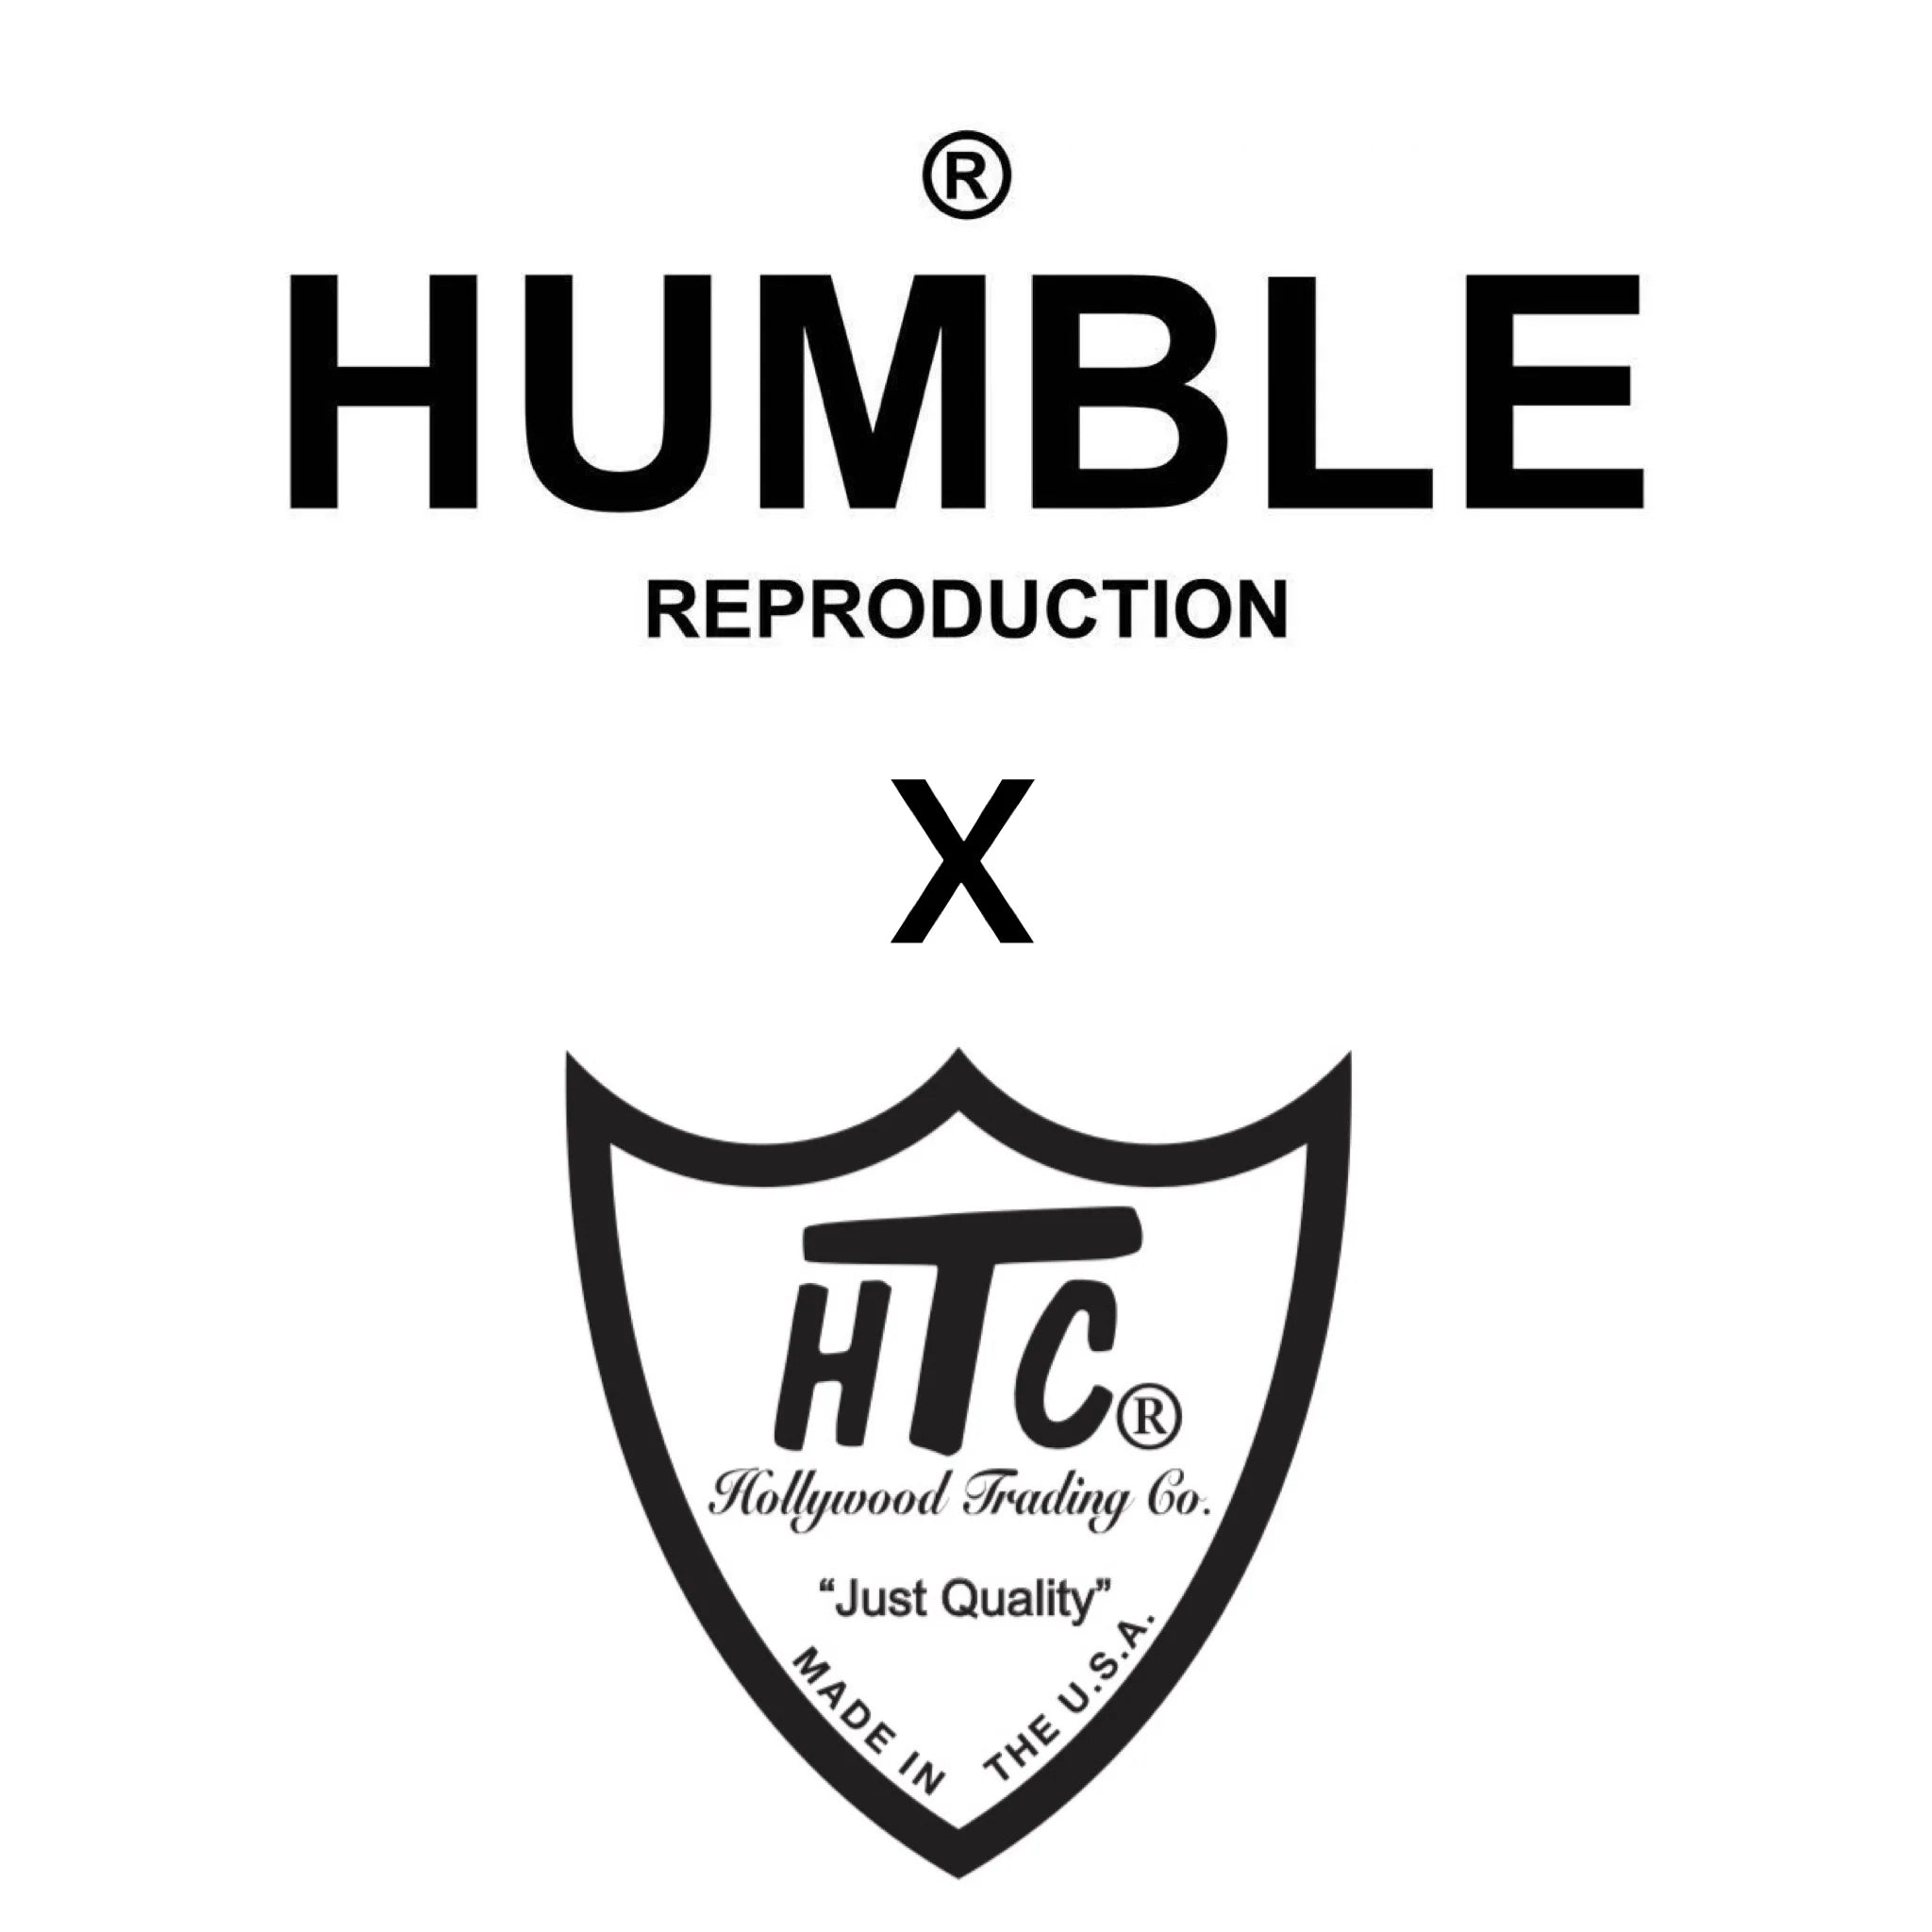 HUMBLE X HTC – HUMBLE REPRODUCTION